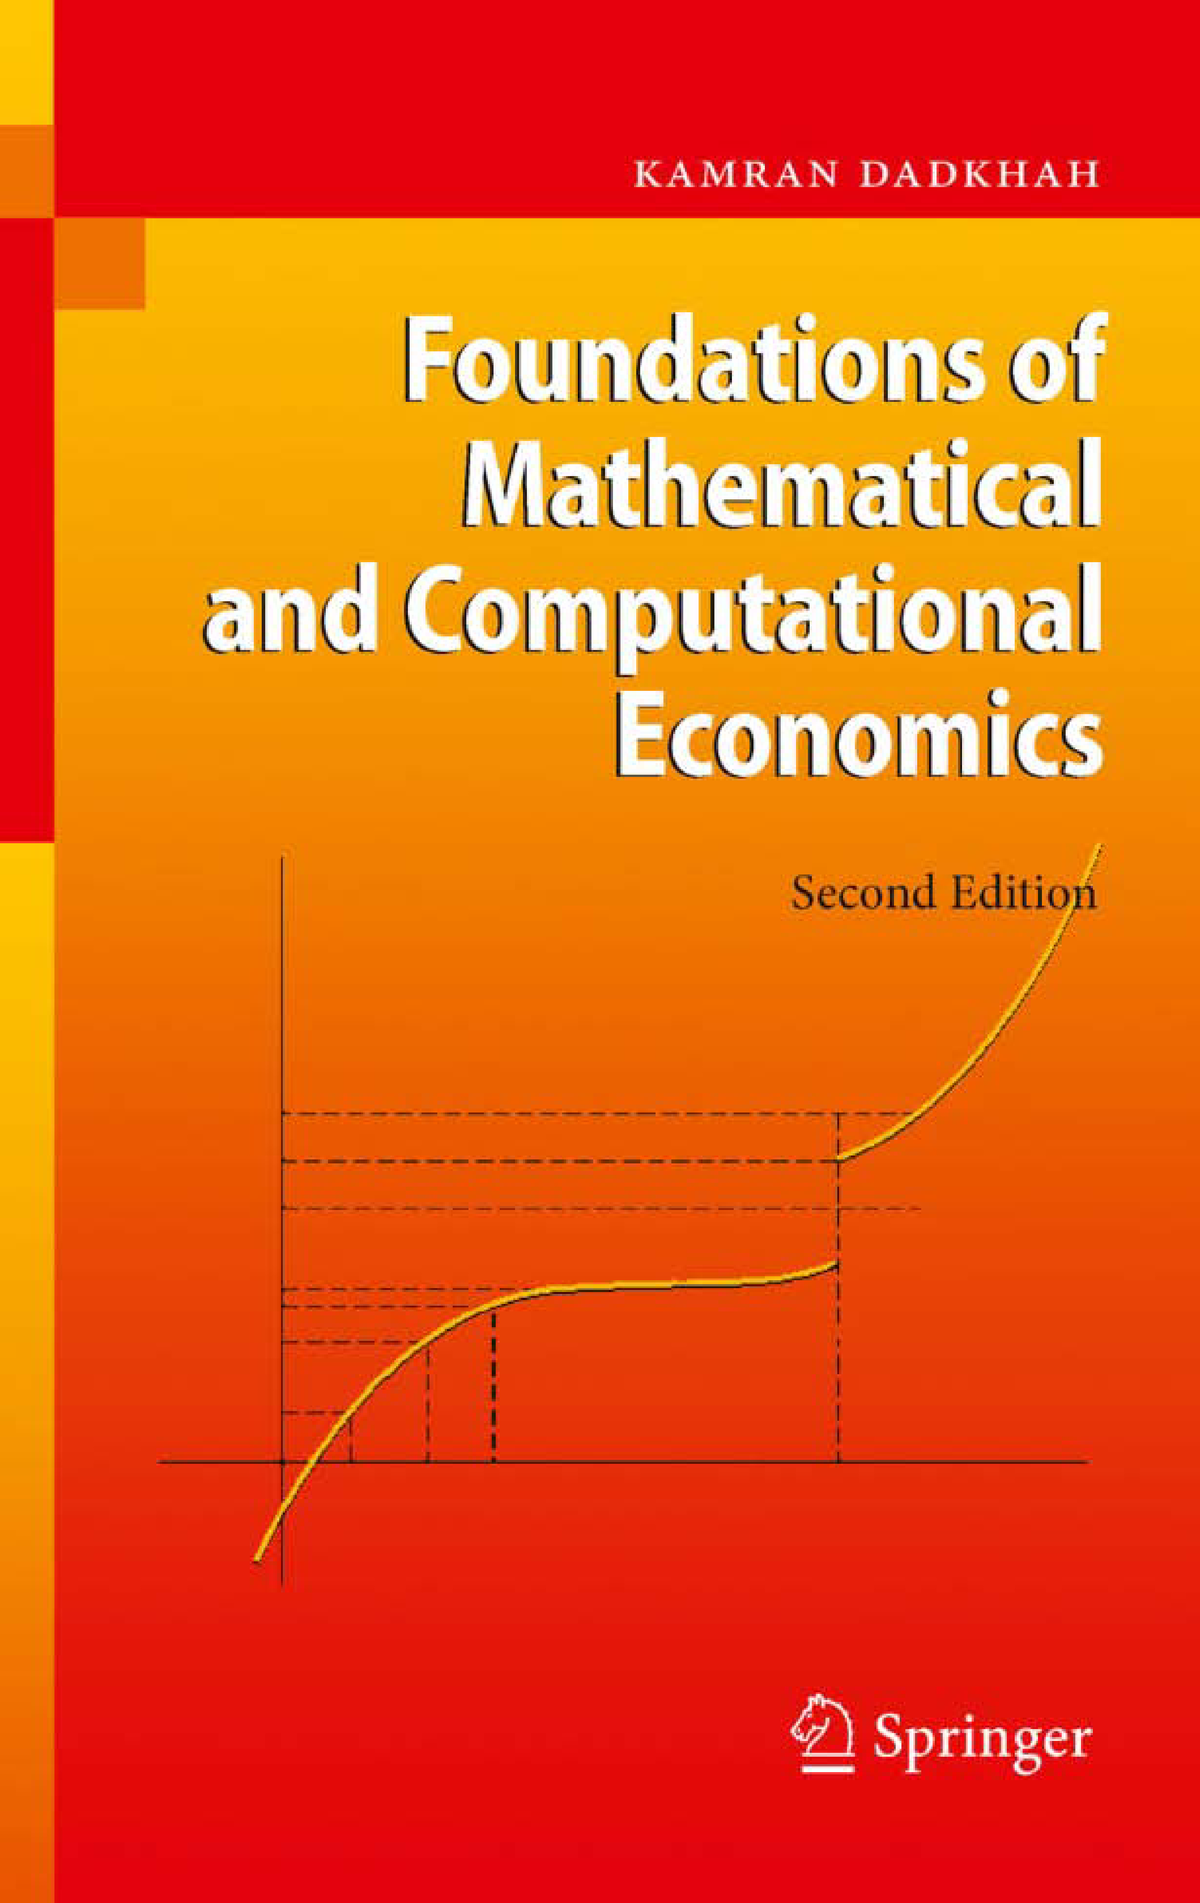 foundations-of-mathematical-and-computational-economics-pdfdrive